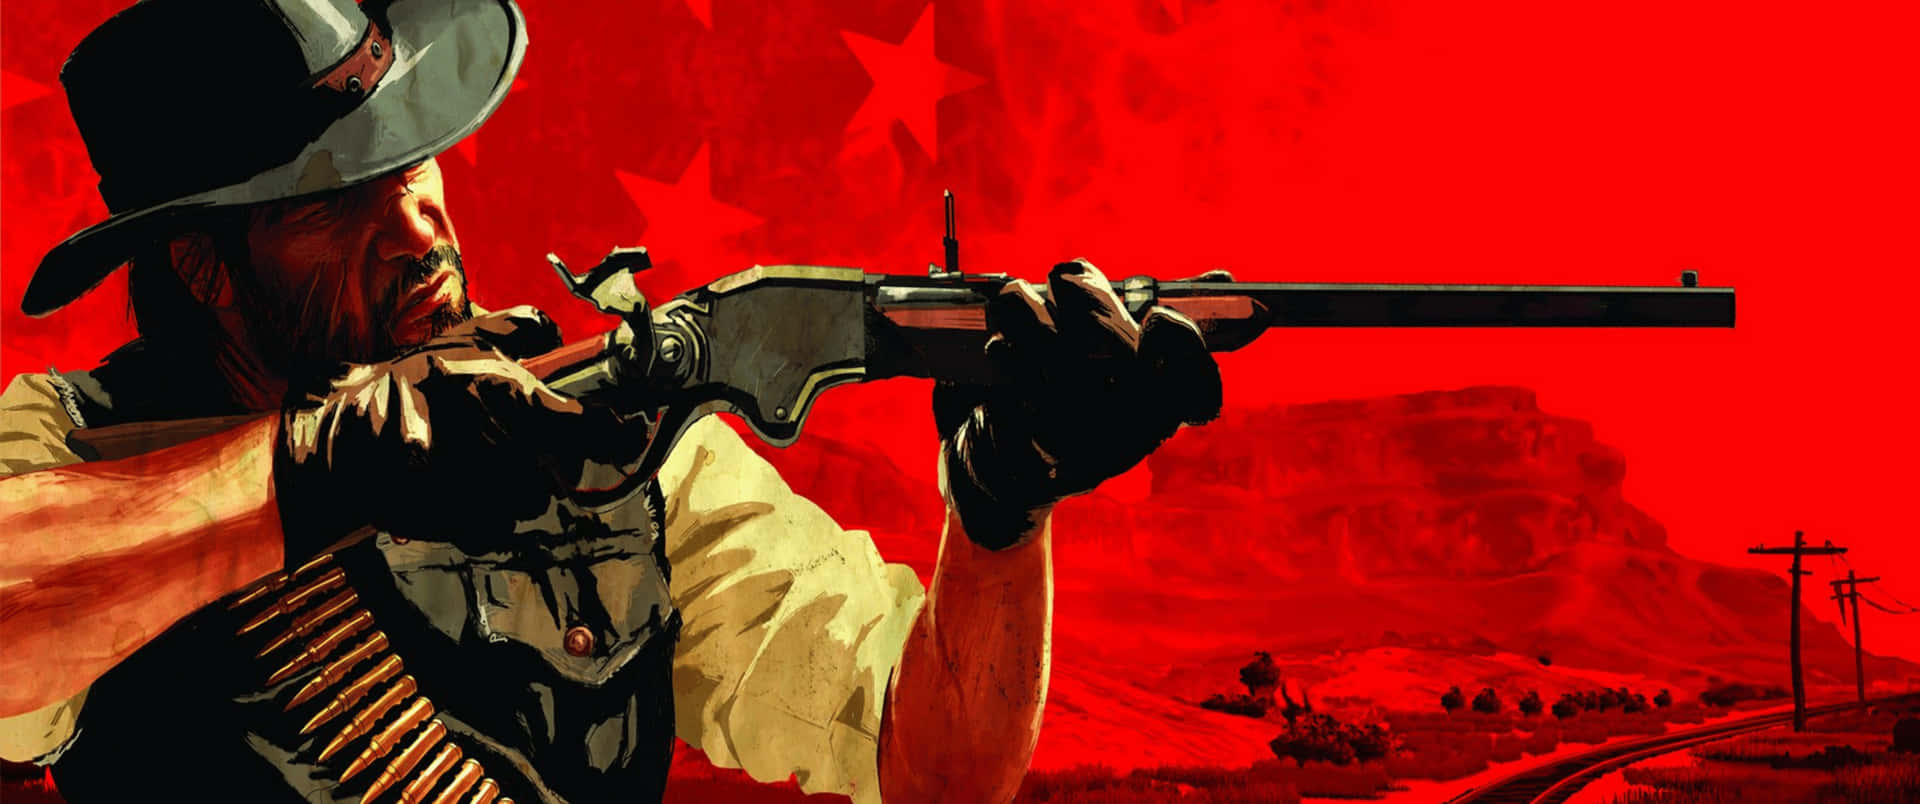 3440x1440p Red Dead Redemption 2 Background Rifle